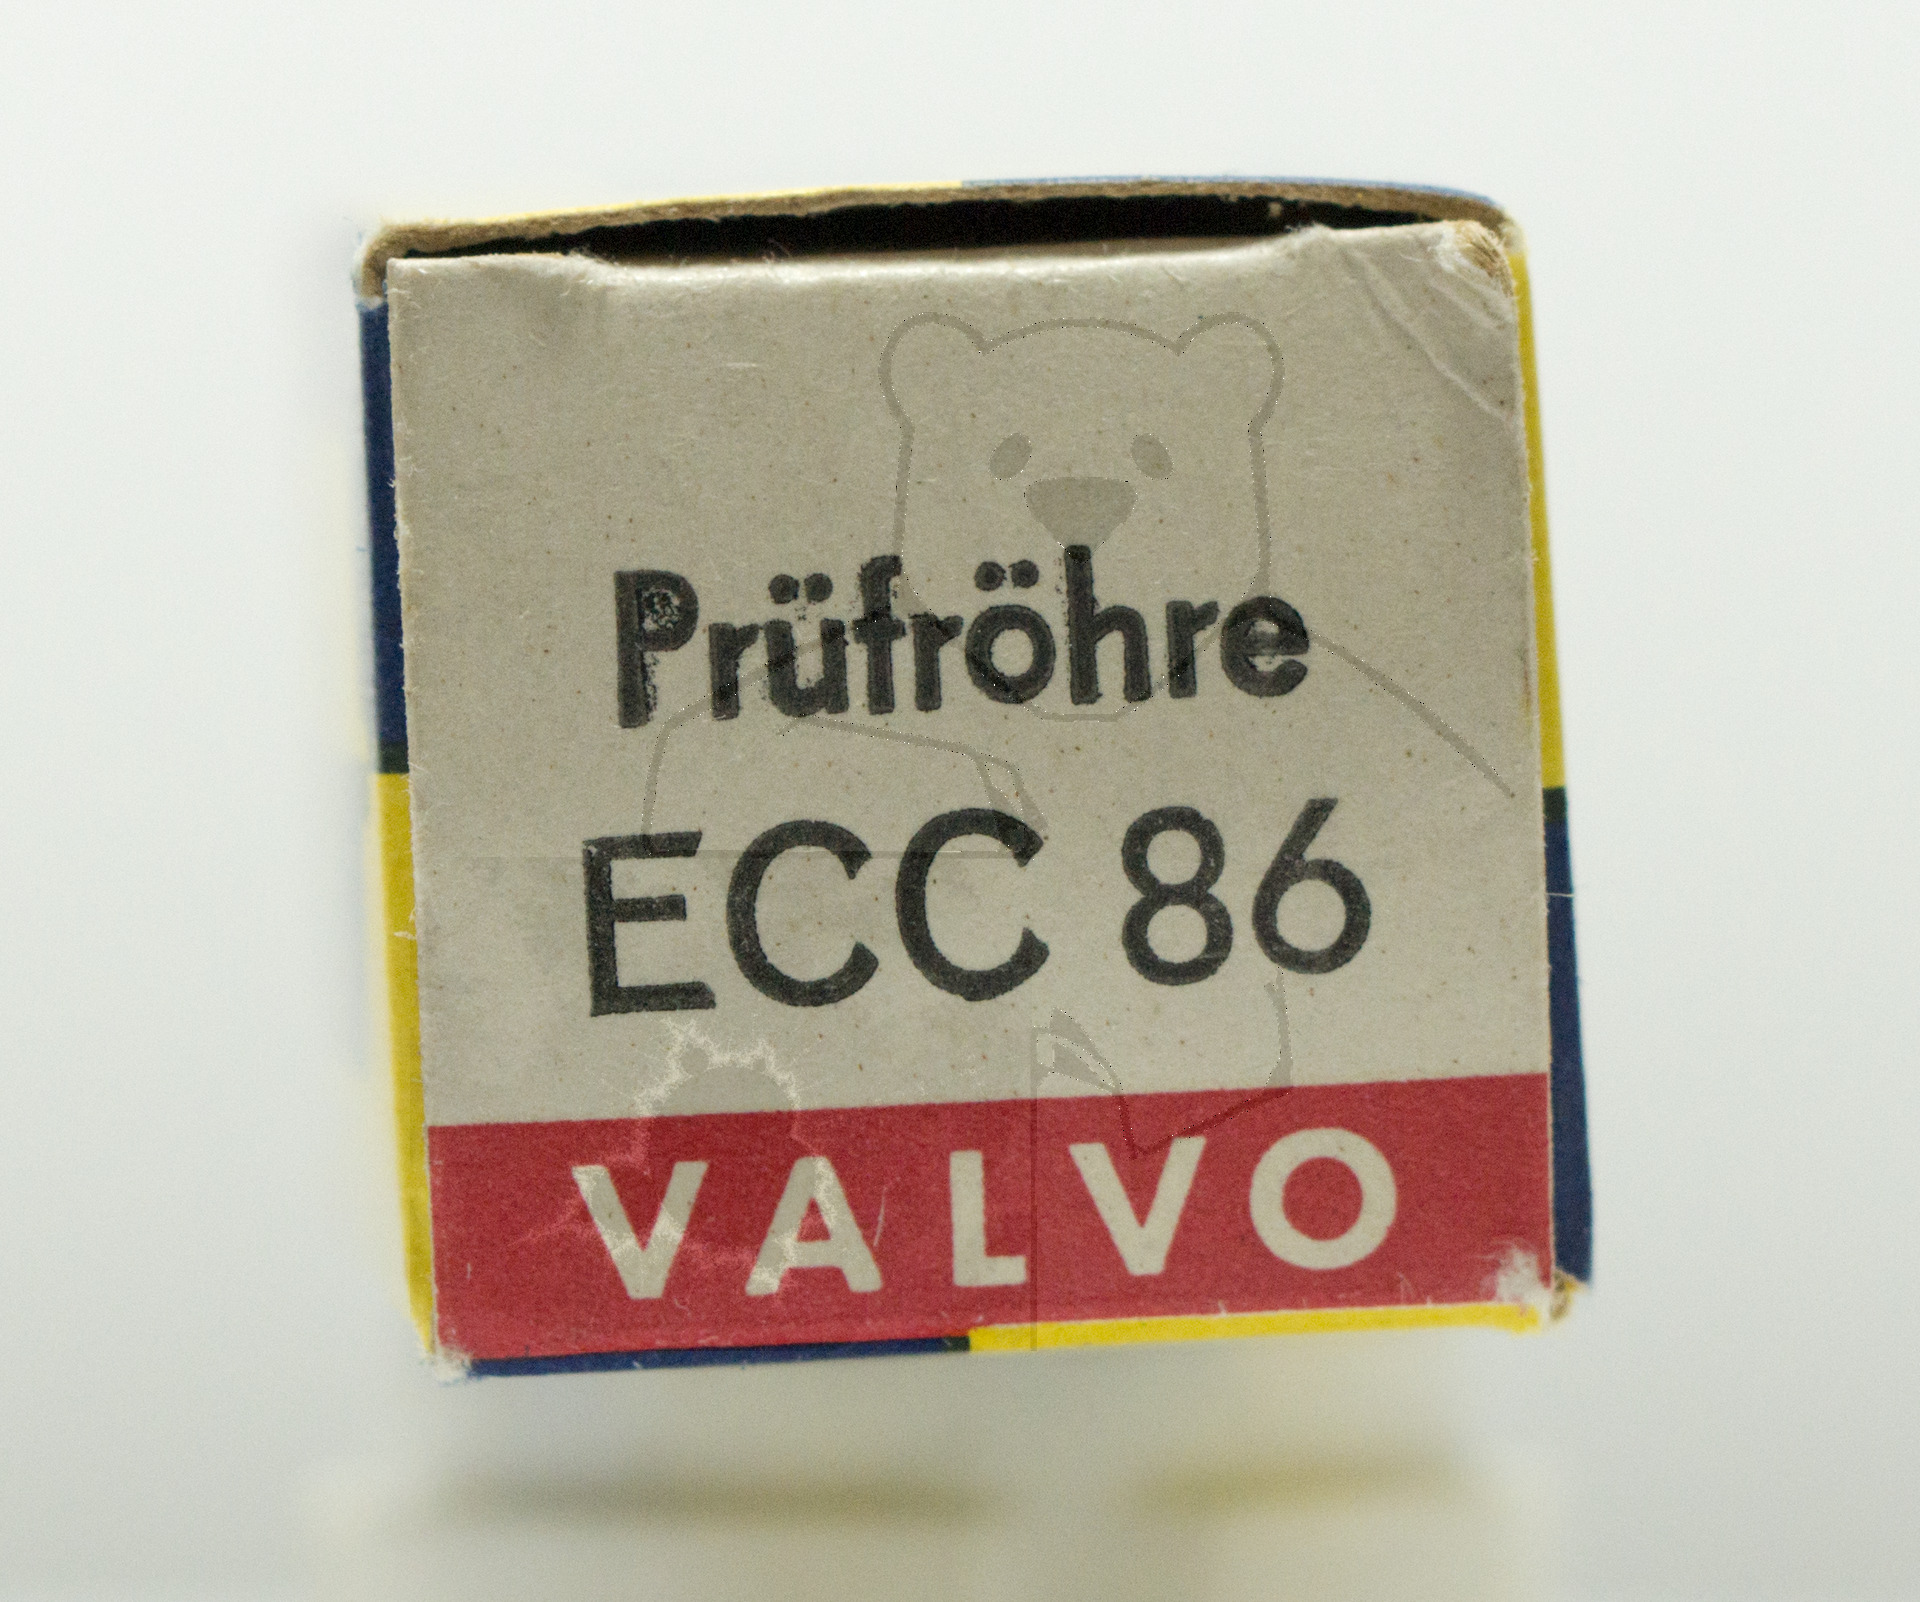 Röhre ECC86 #3938 Prüfröhre Verpackung Bild 2